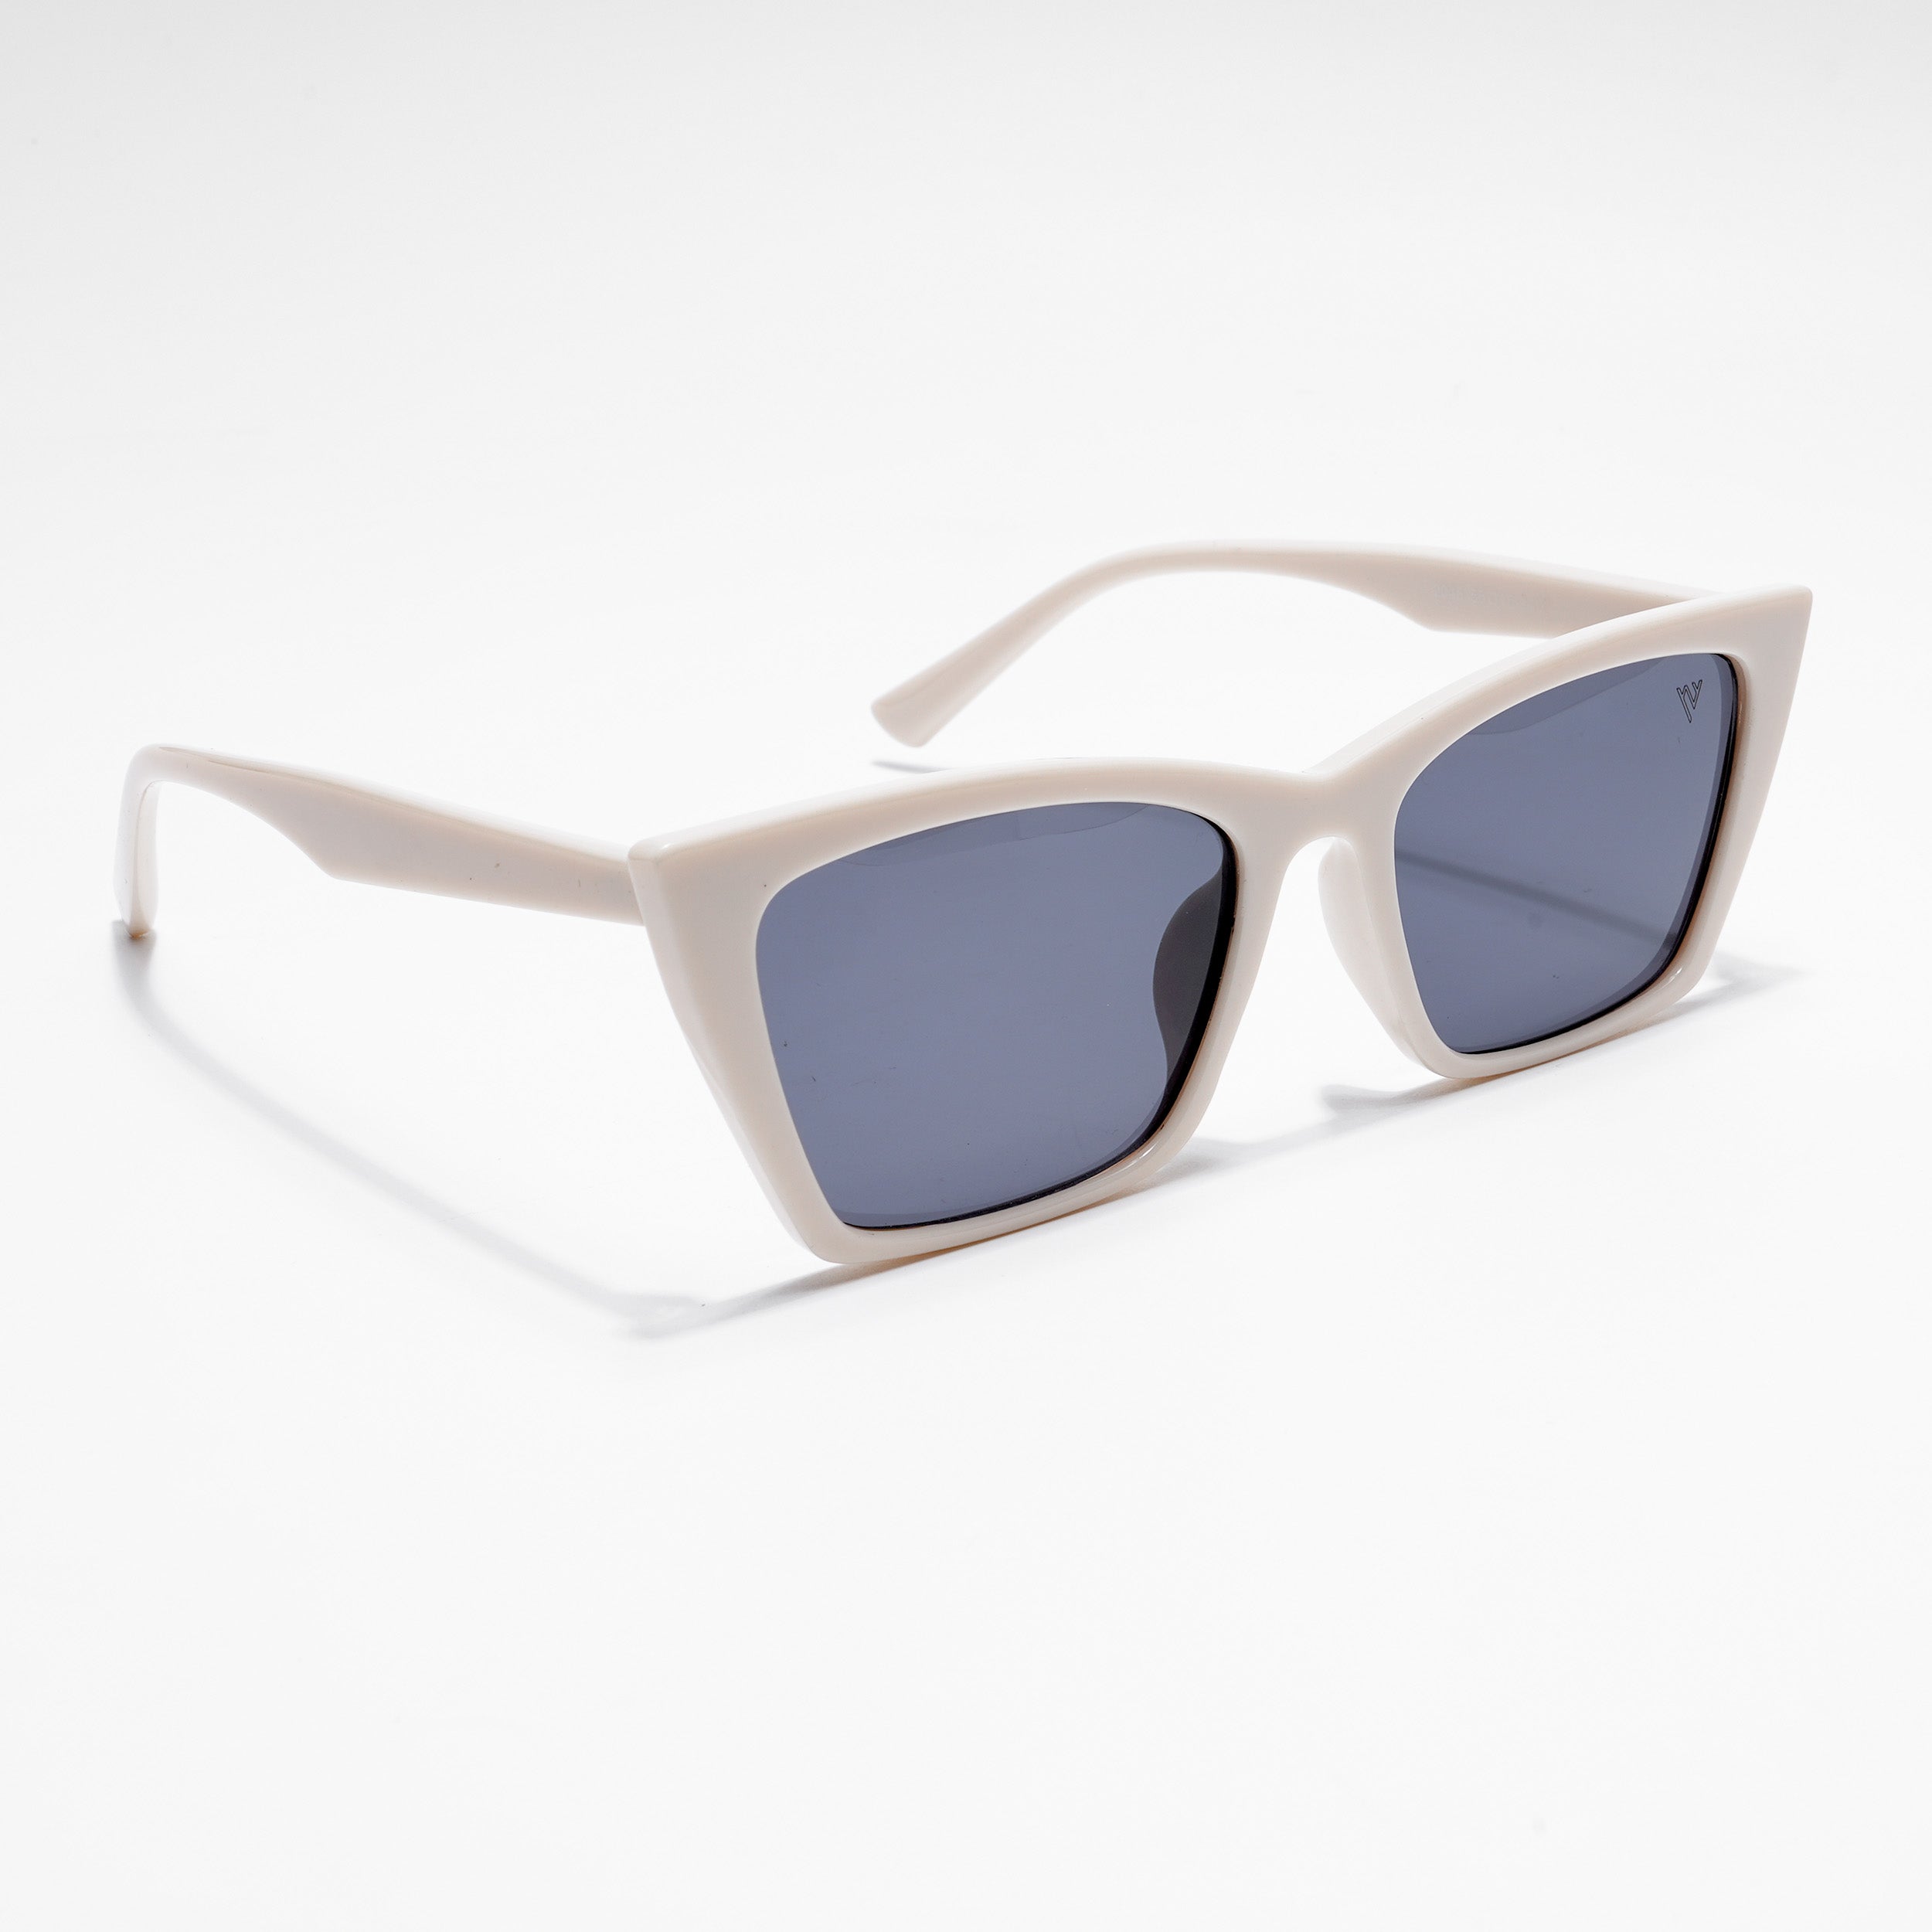 Voyage Black Cateye Sunglasses for Women - MG3991